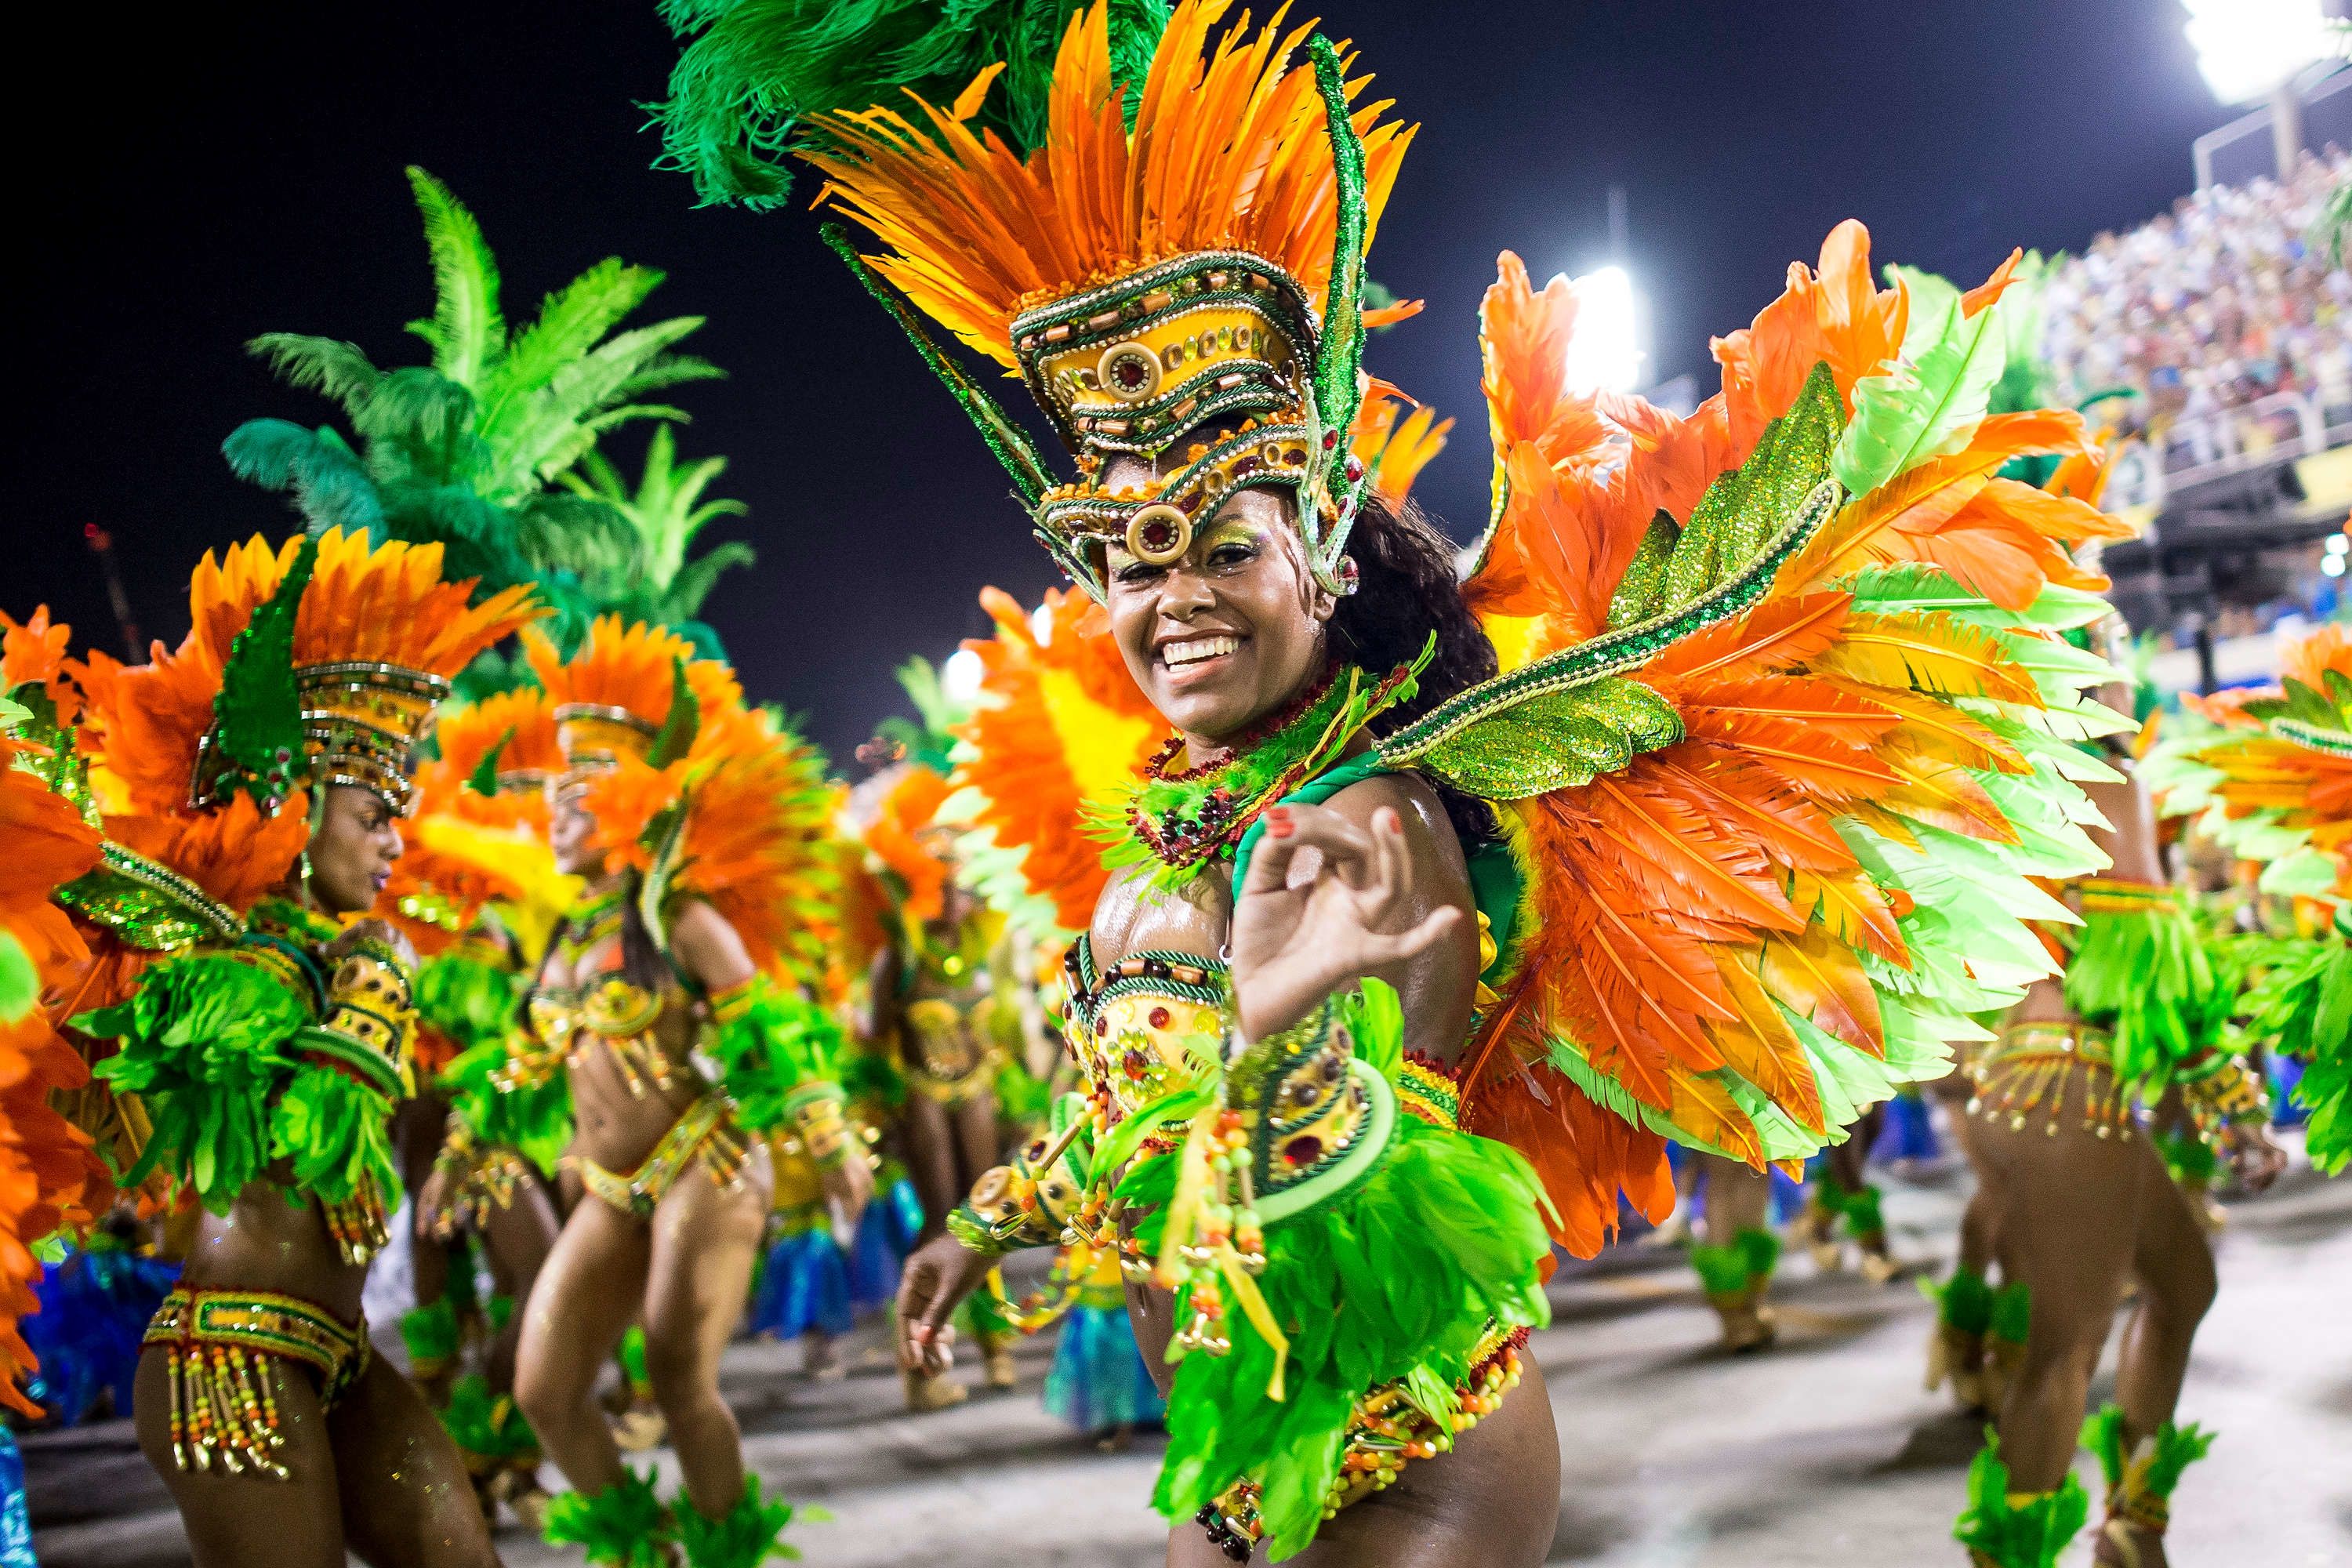 Rio and São Paulo postpone official Carnival parades until April